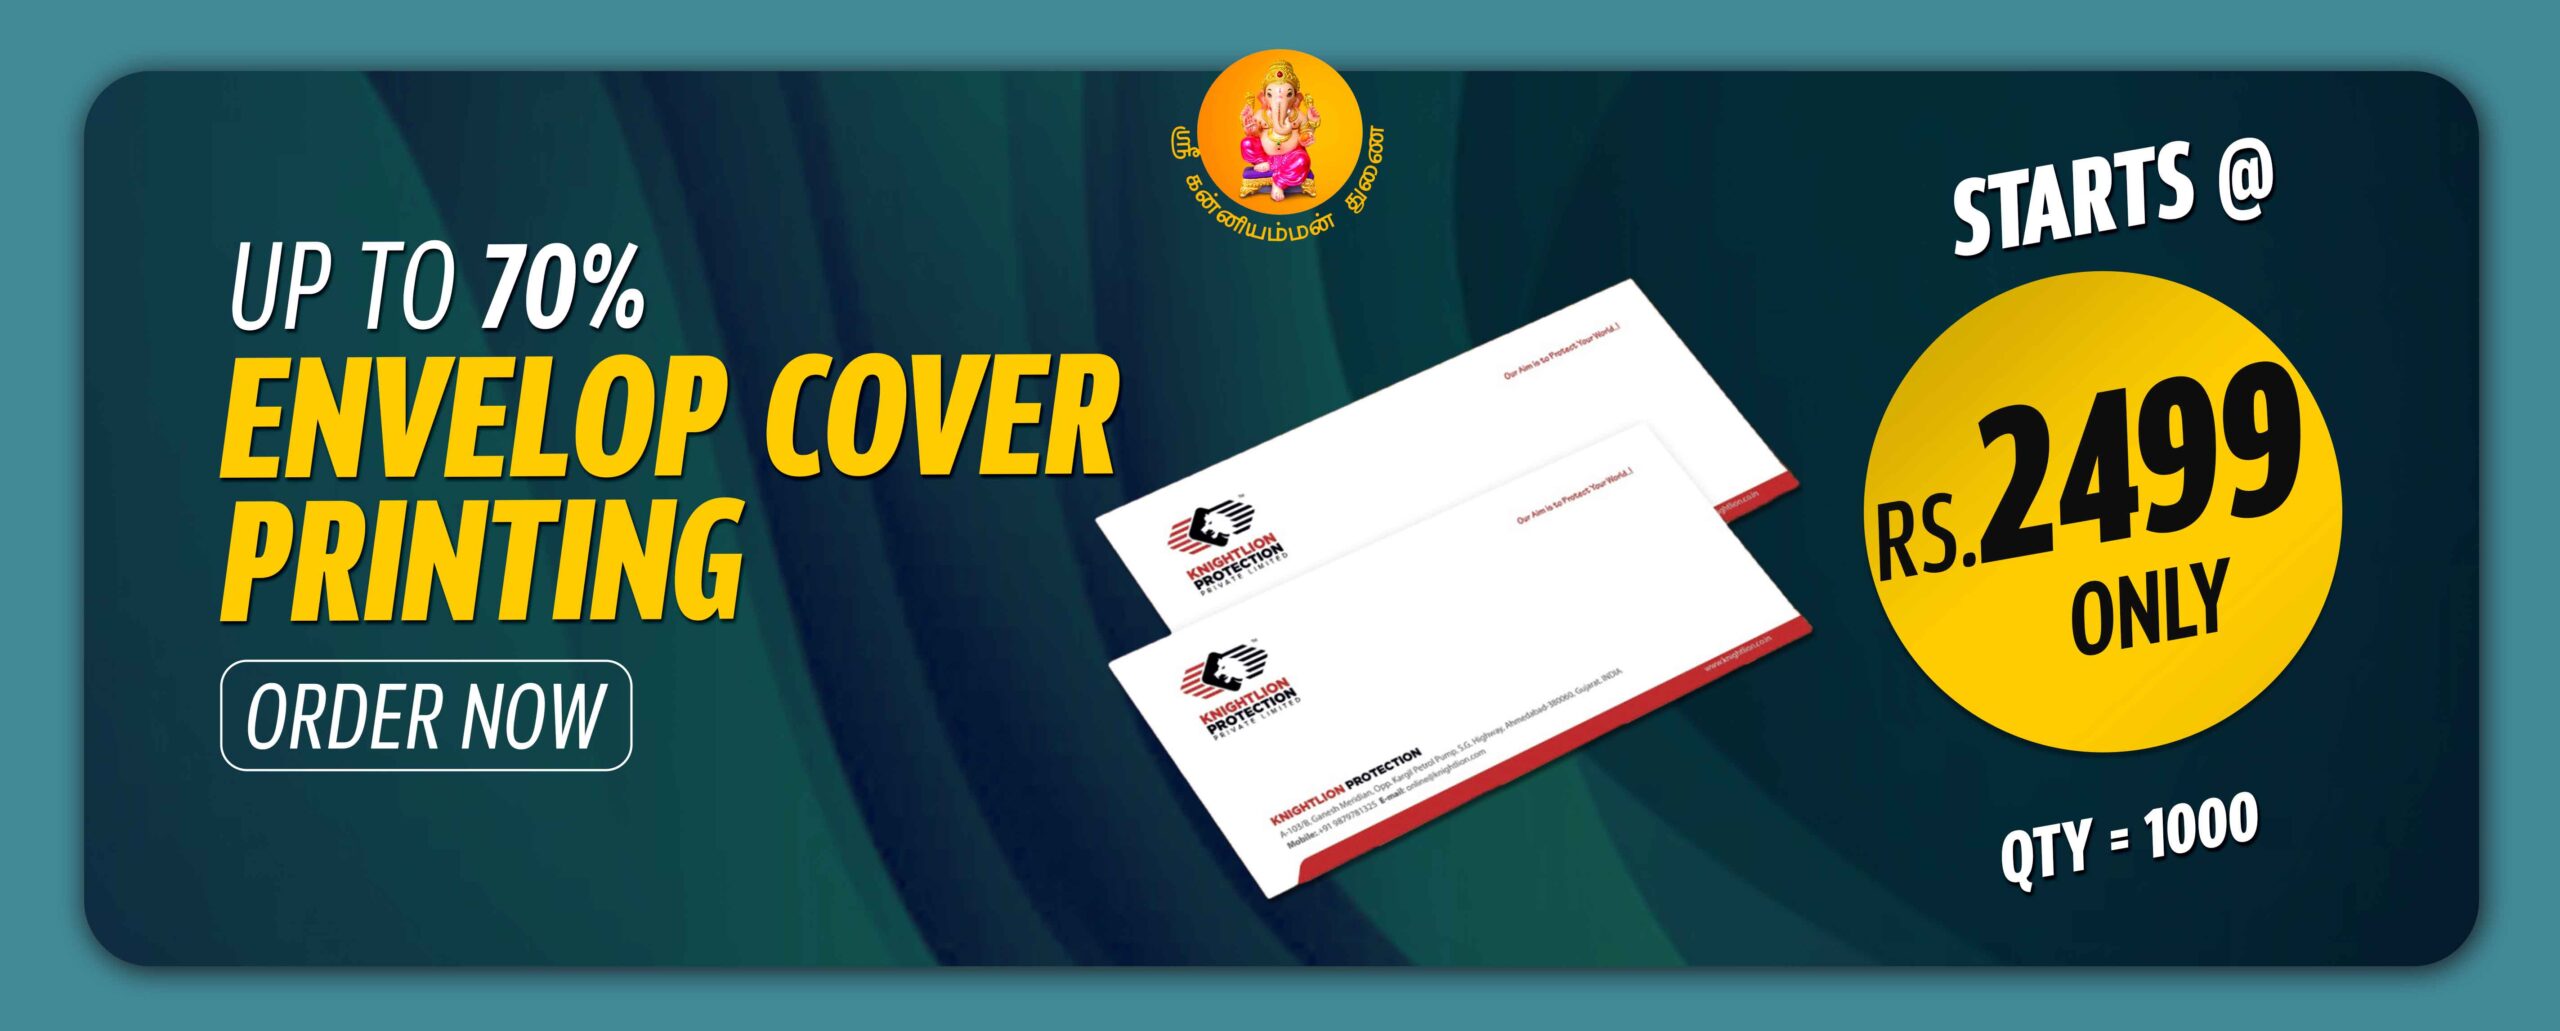 Envelope-Cover-Printing-by-ePrintOn